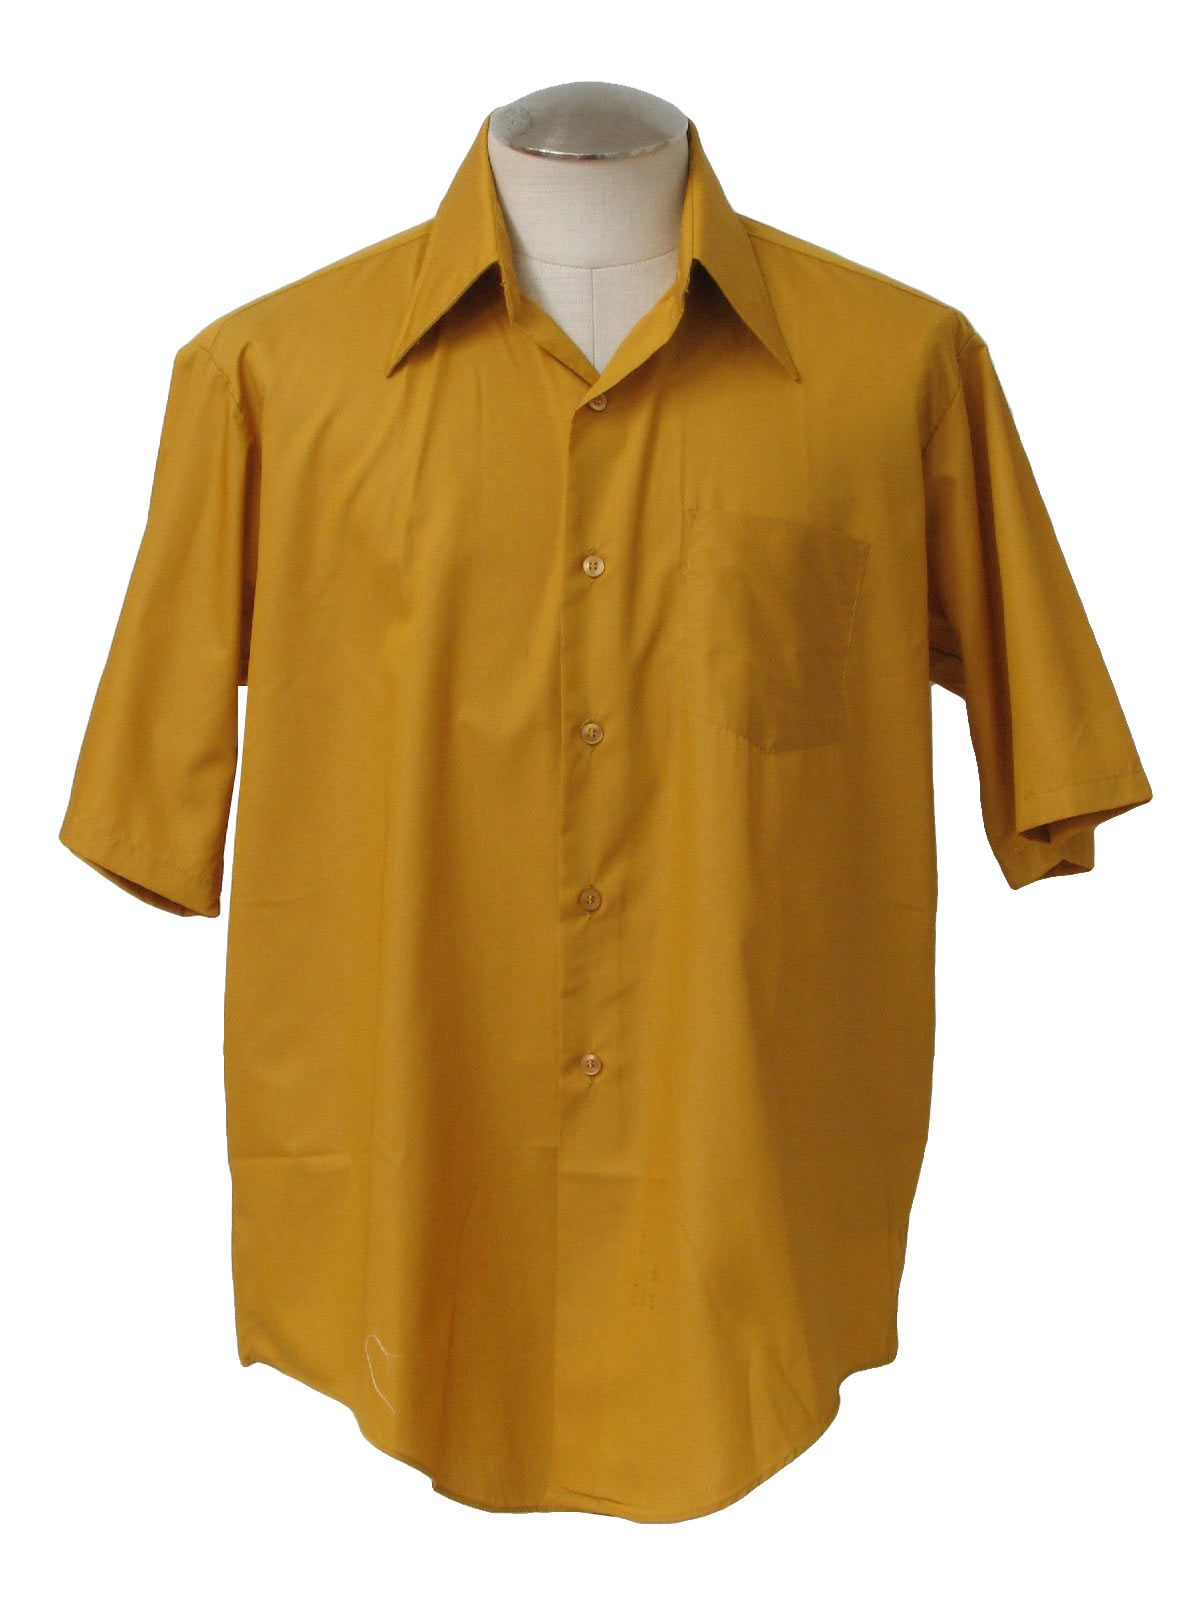 Sport Shirt Buttons (Collar / Sleeve / Front), Golden Yellow Color